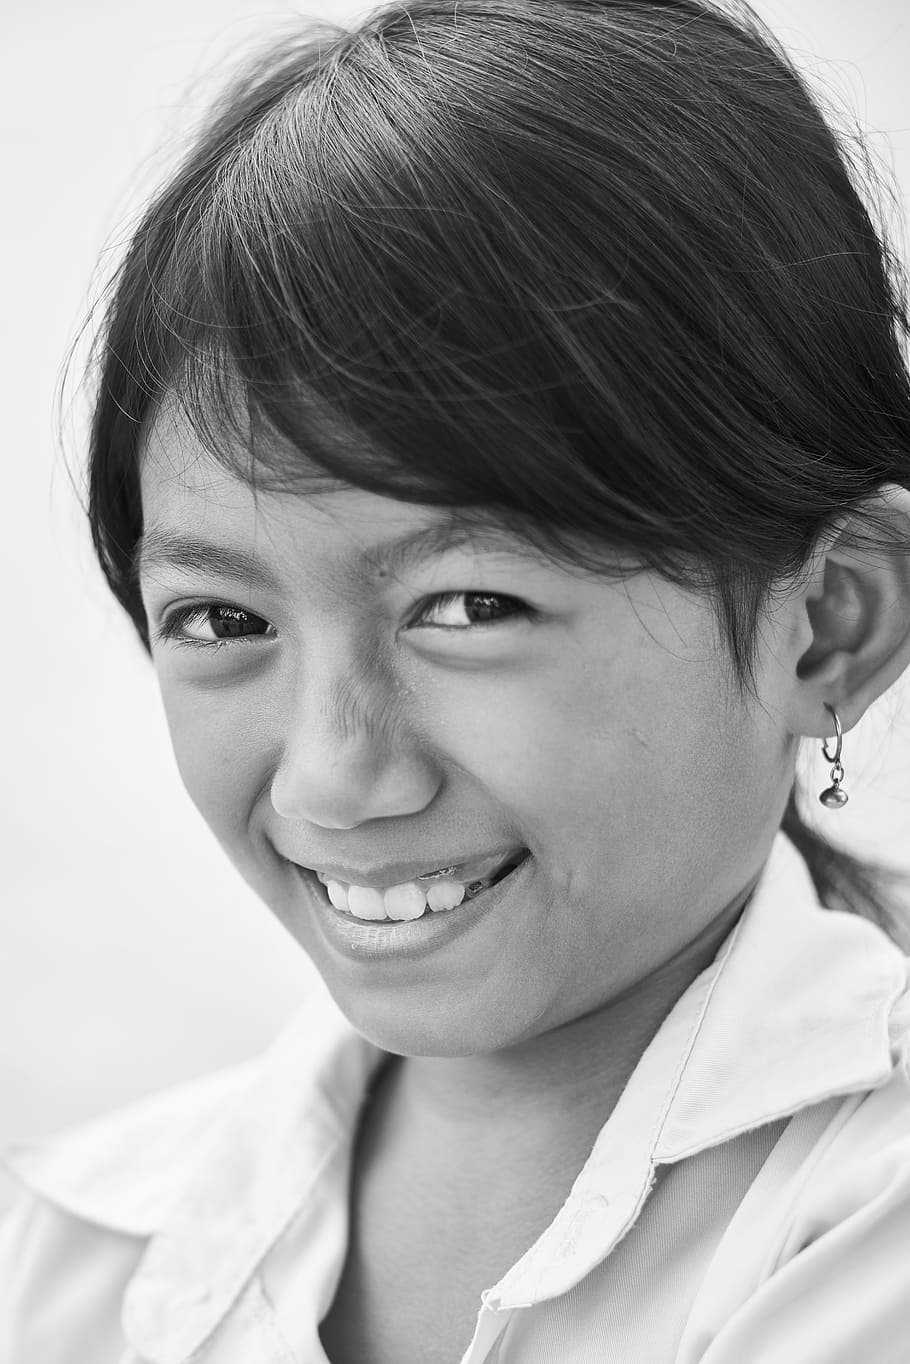 Portrait, Black And White, Human, Girl, women's, cambodia, travel, documentary, contact, exposure